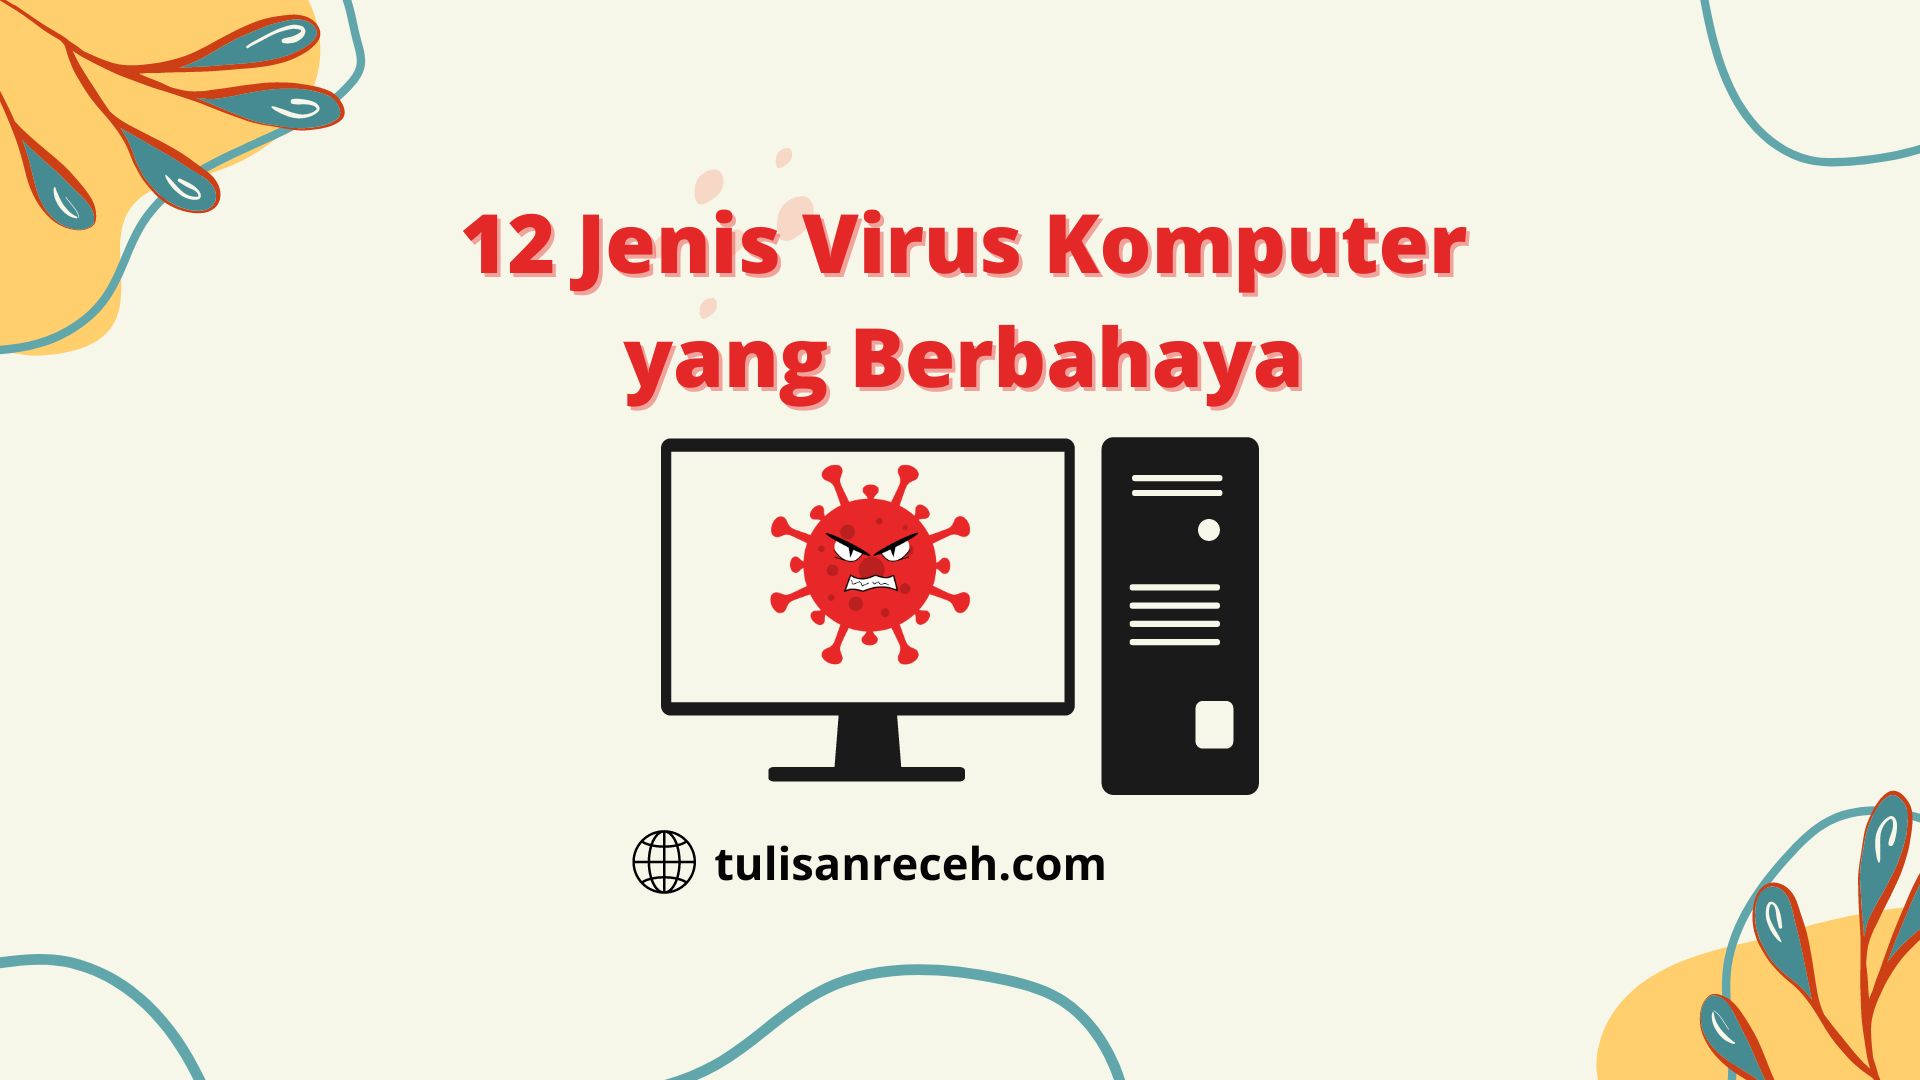 12 Jenis Virus Komputer yang Berbahaya tulisanreceh.com